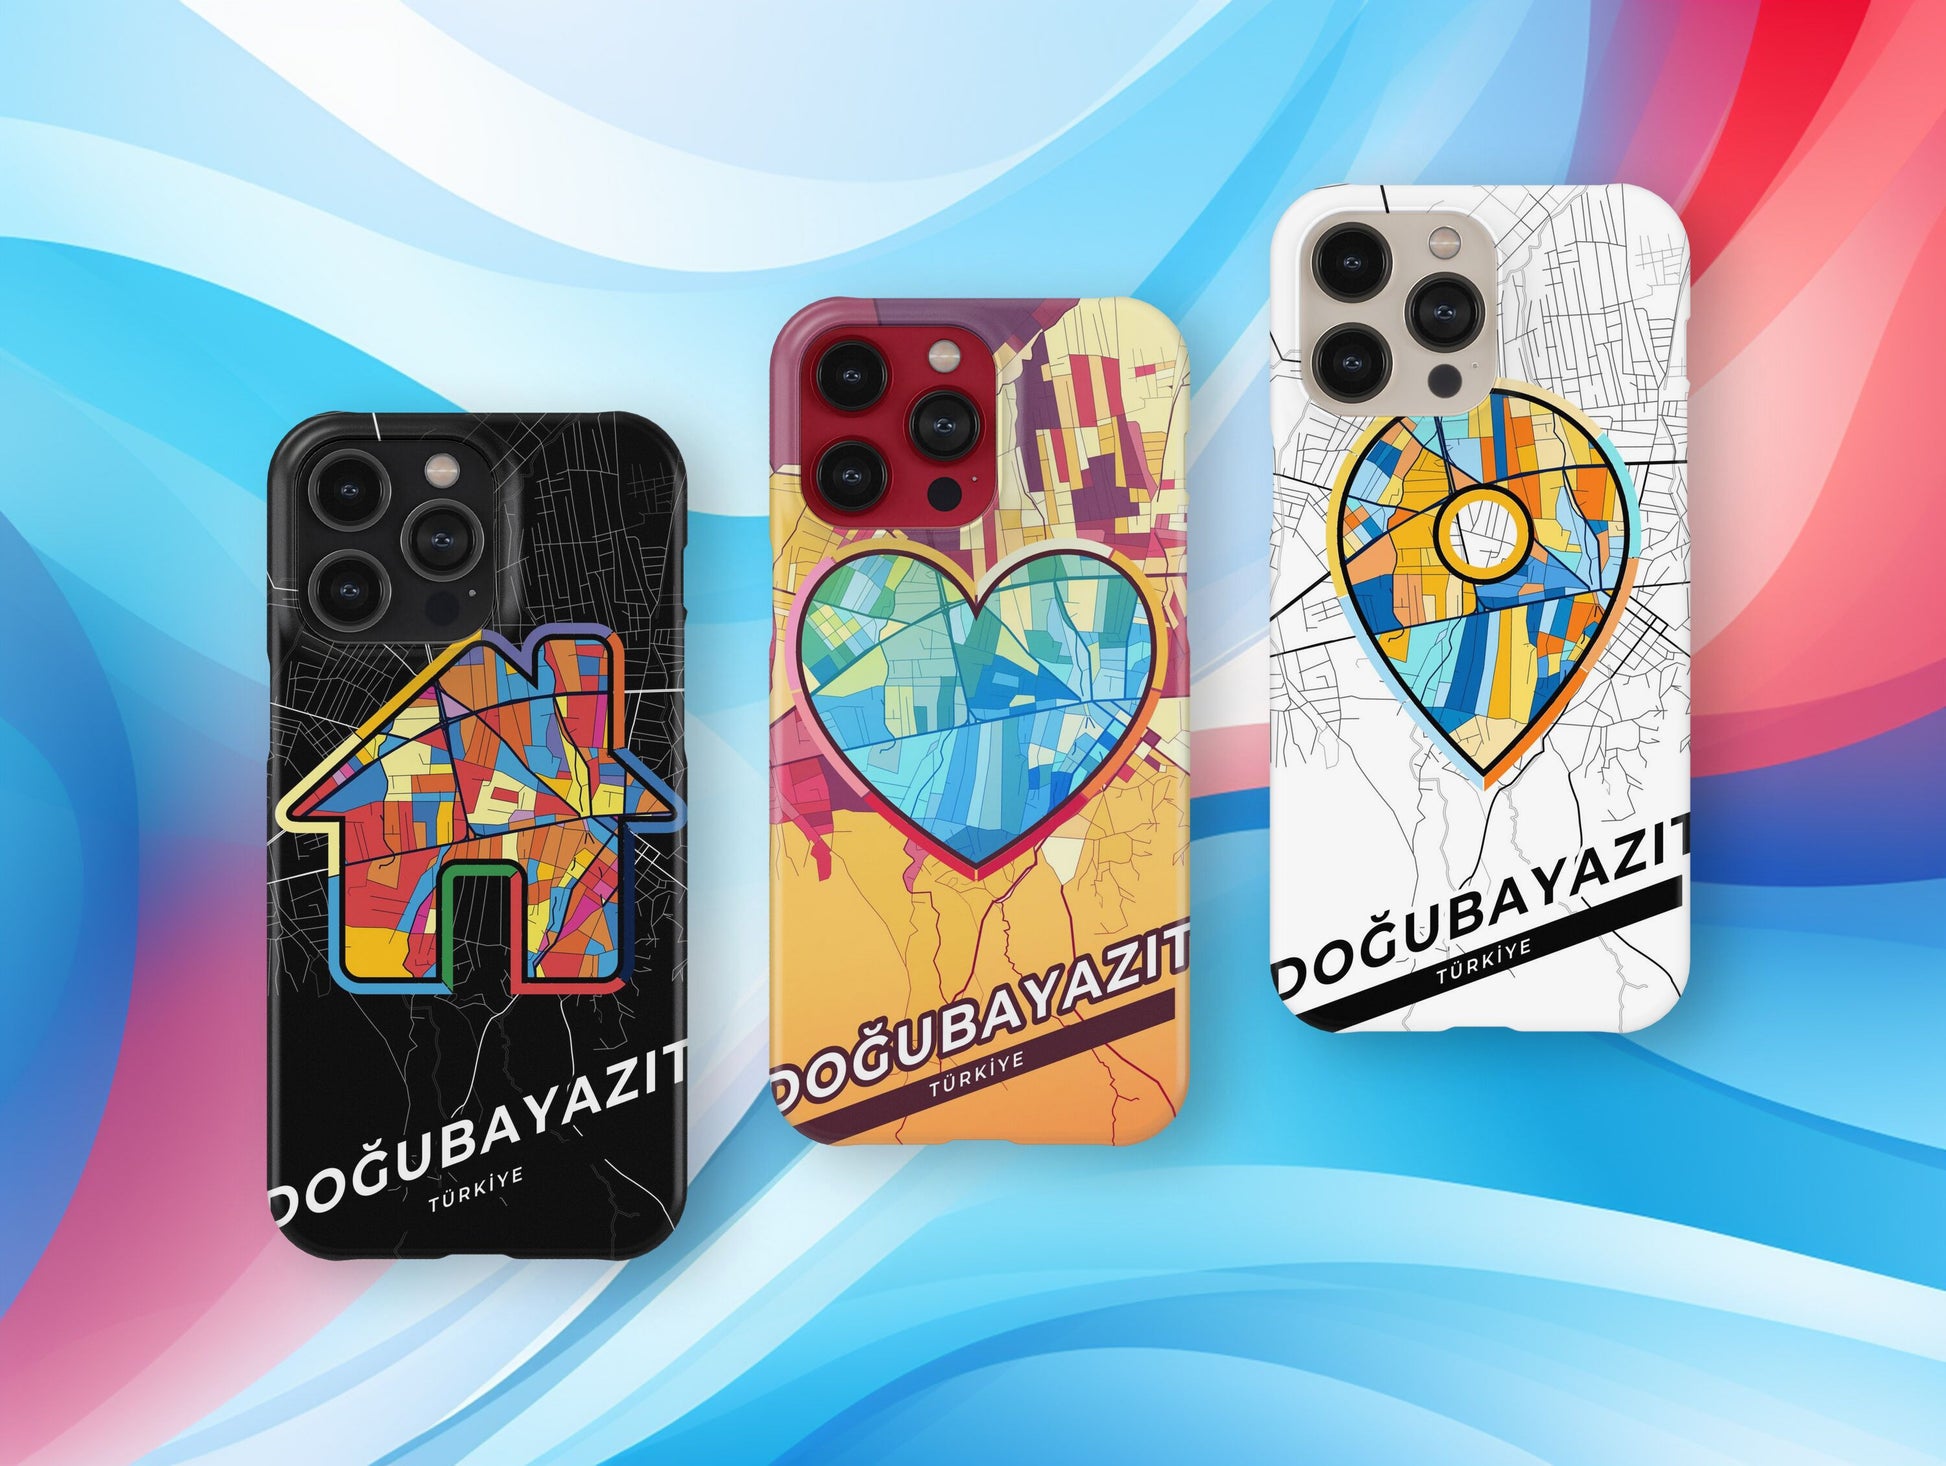 Doğubayazıt Turkey slim phone case with colorful icon. Birthday, wedding or housewarming gift. Couple match cases.